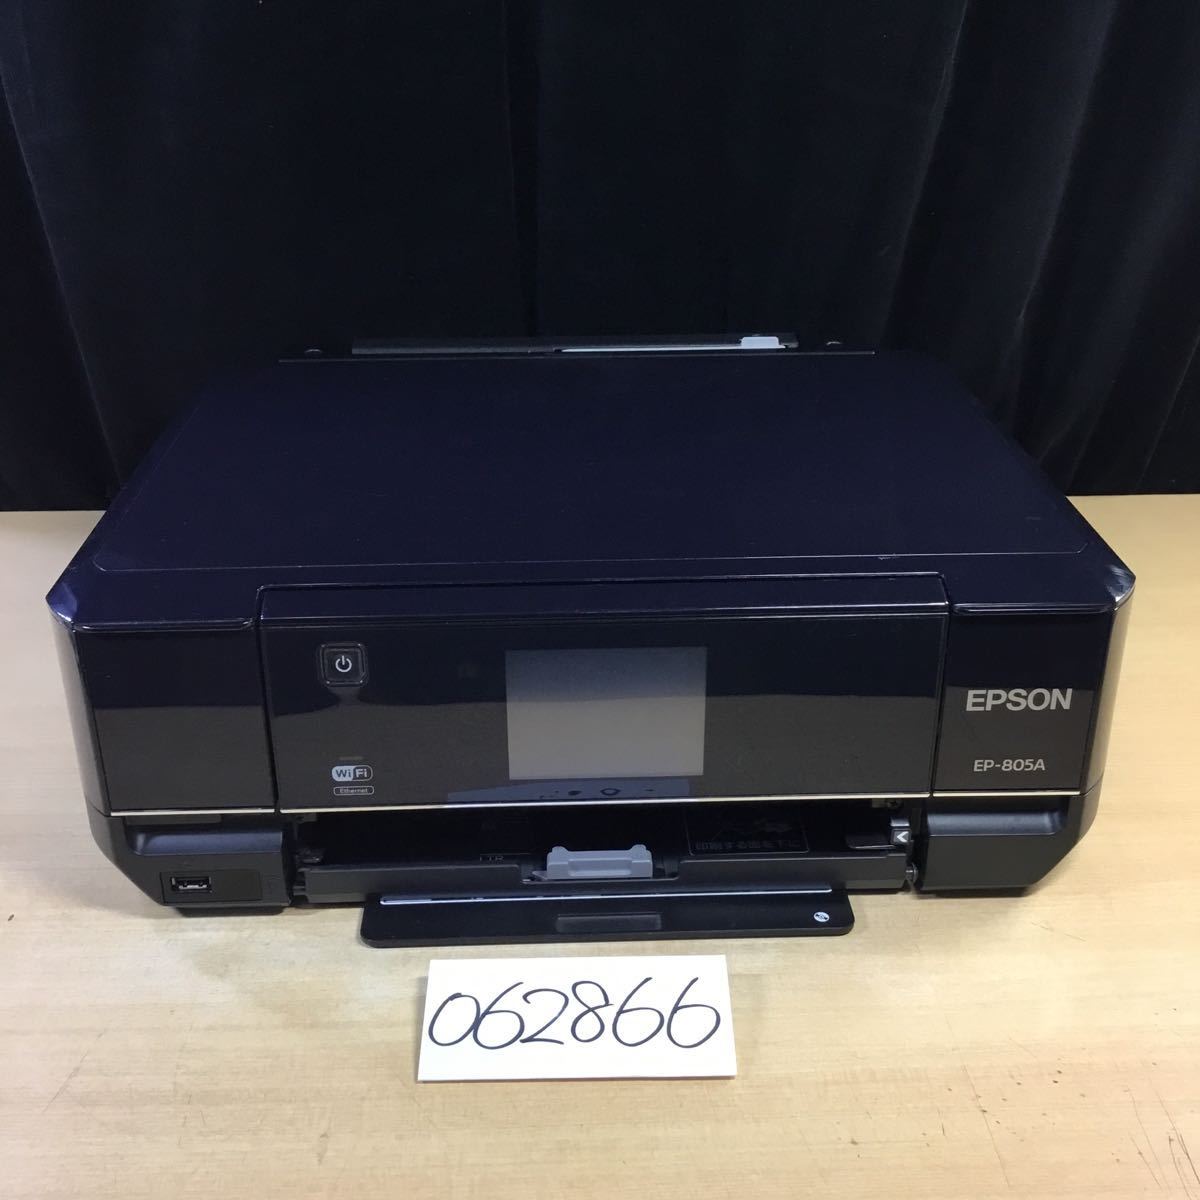 062866) EPSON EP-805A インクジェットプリンタ 複合機 テスト印刷済み